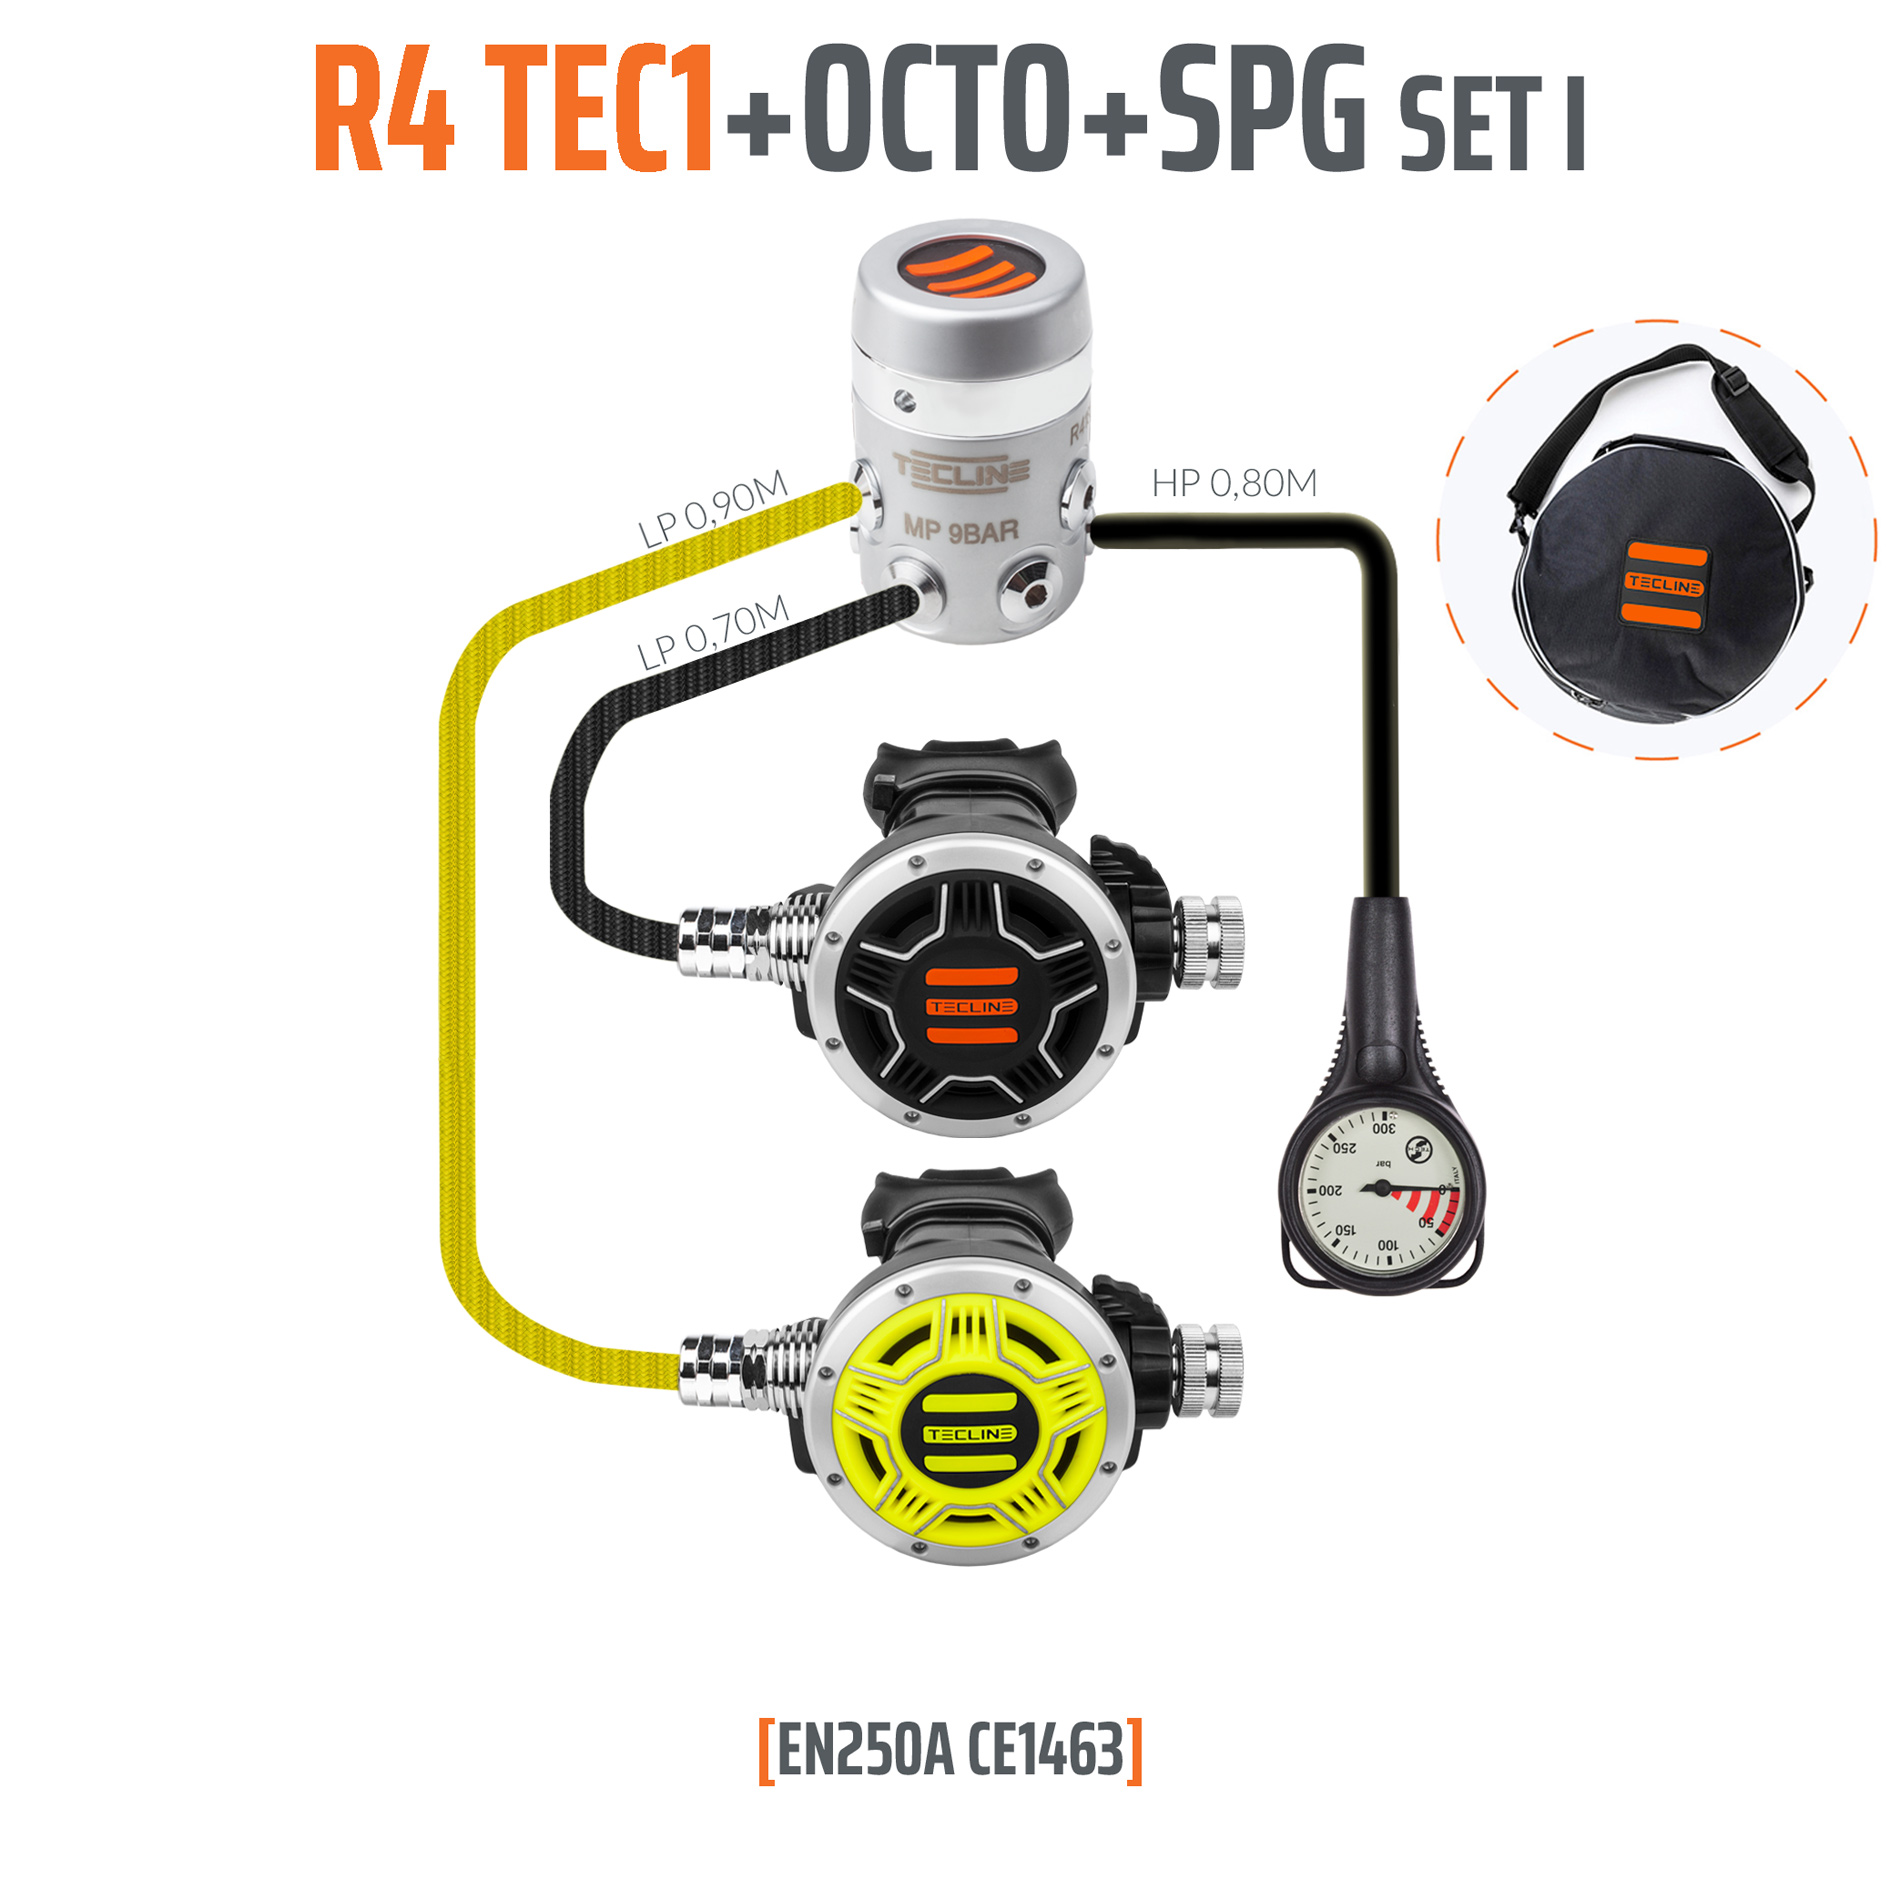 Tecline Regulator R4 TEC1 set I (reg +octo+spg) – EN250A